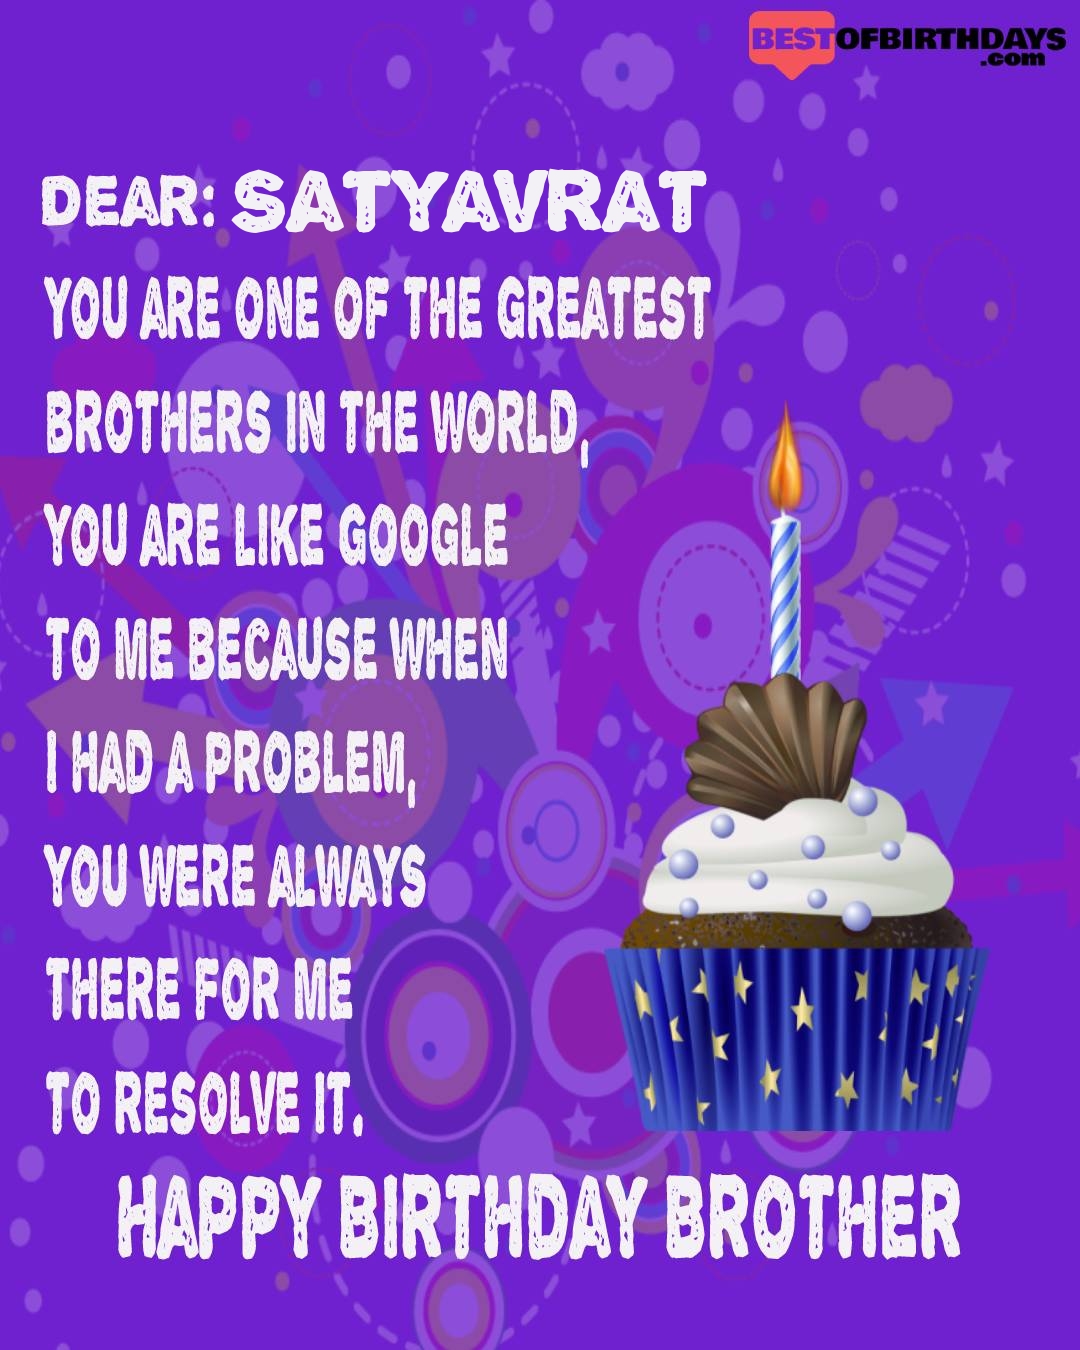 Happy birthday satyavrat bhai brother bro